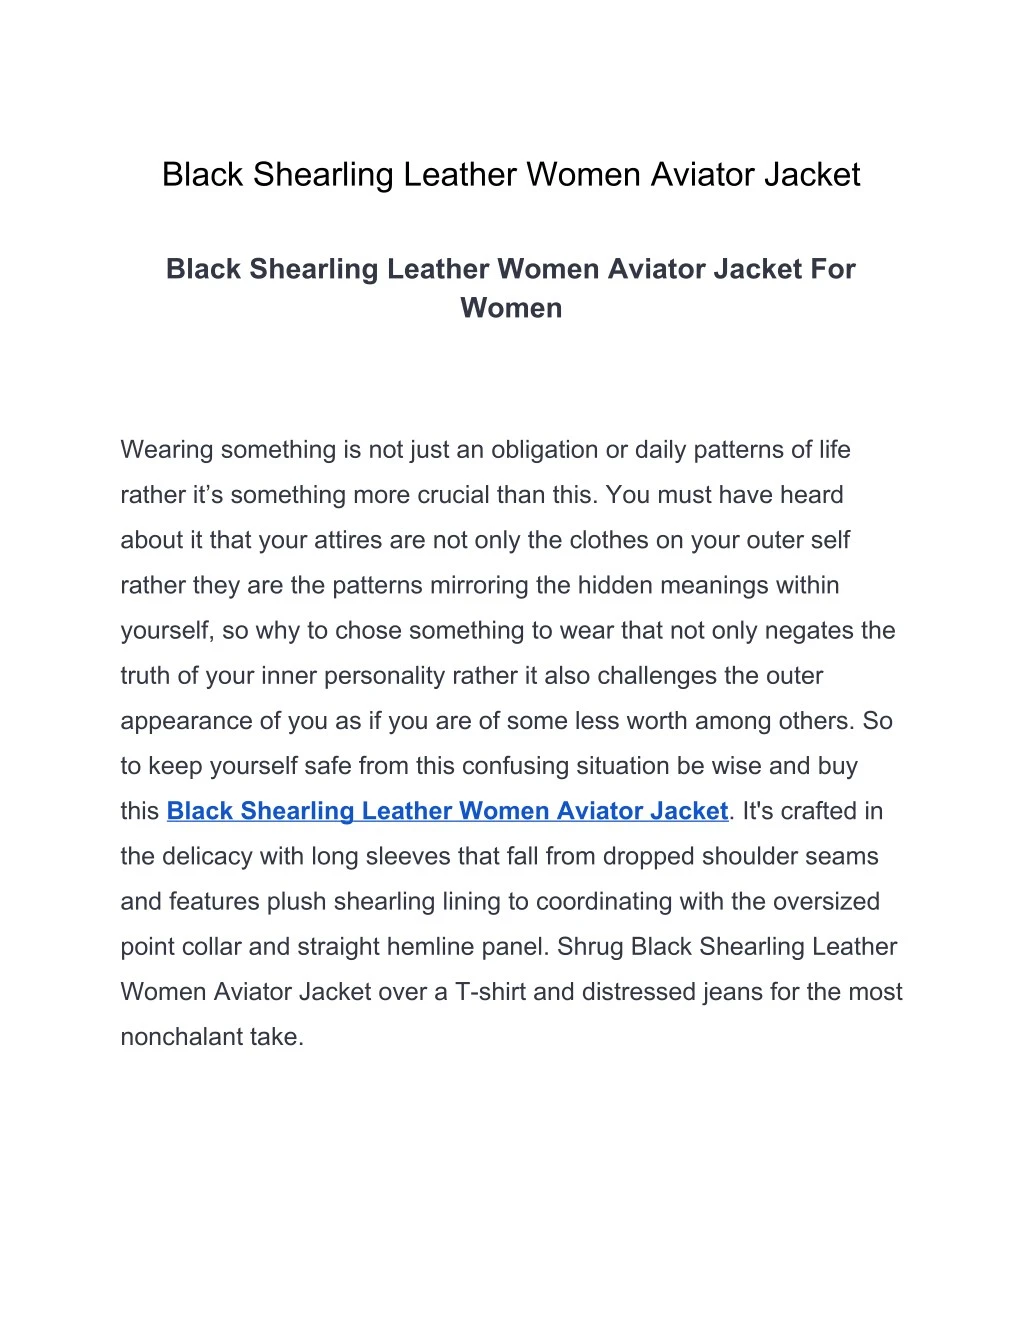 black shearling leather women aviator jacket